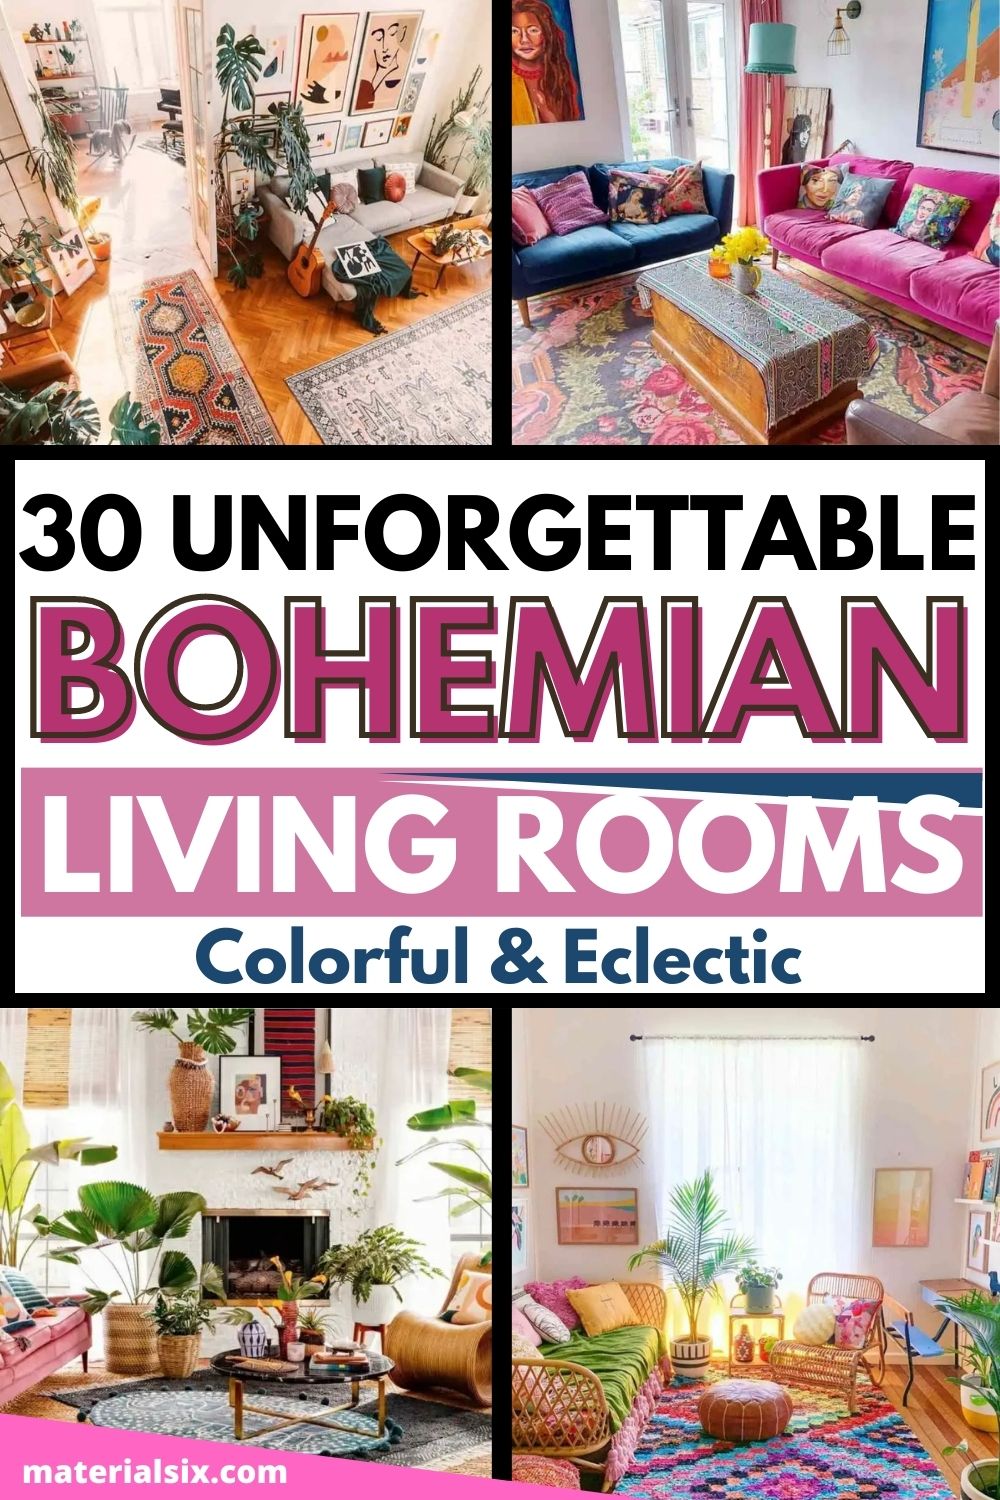 30 Unforgettable Bohemian Living Room Ideas